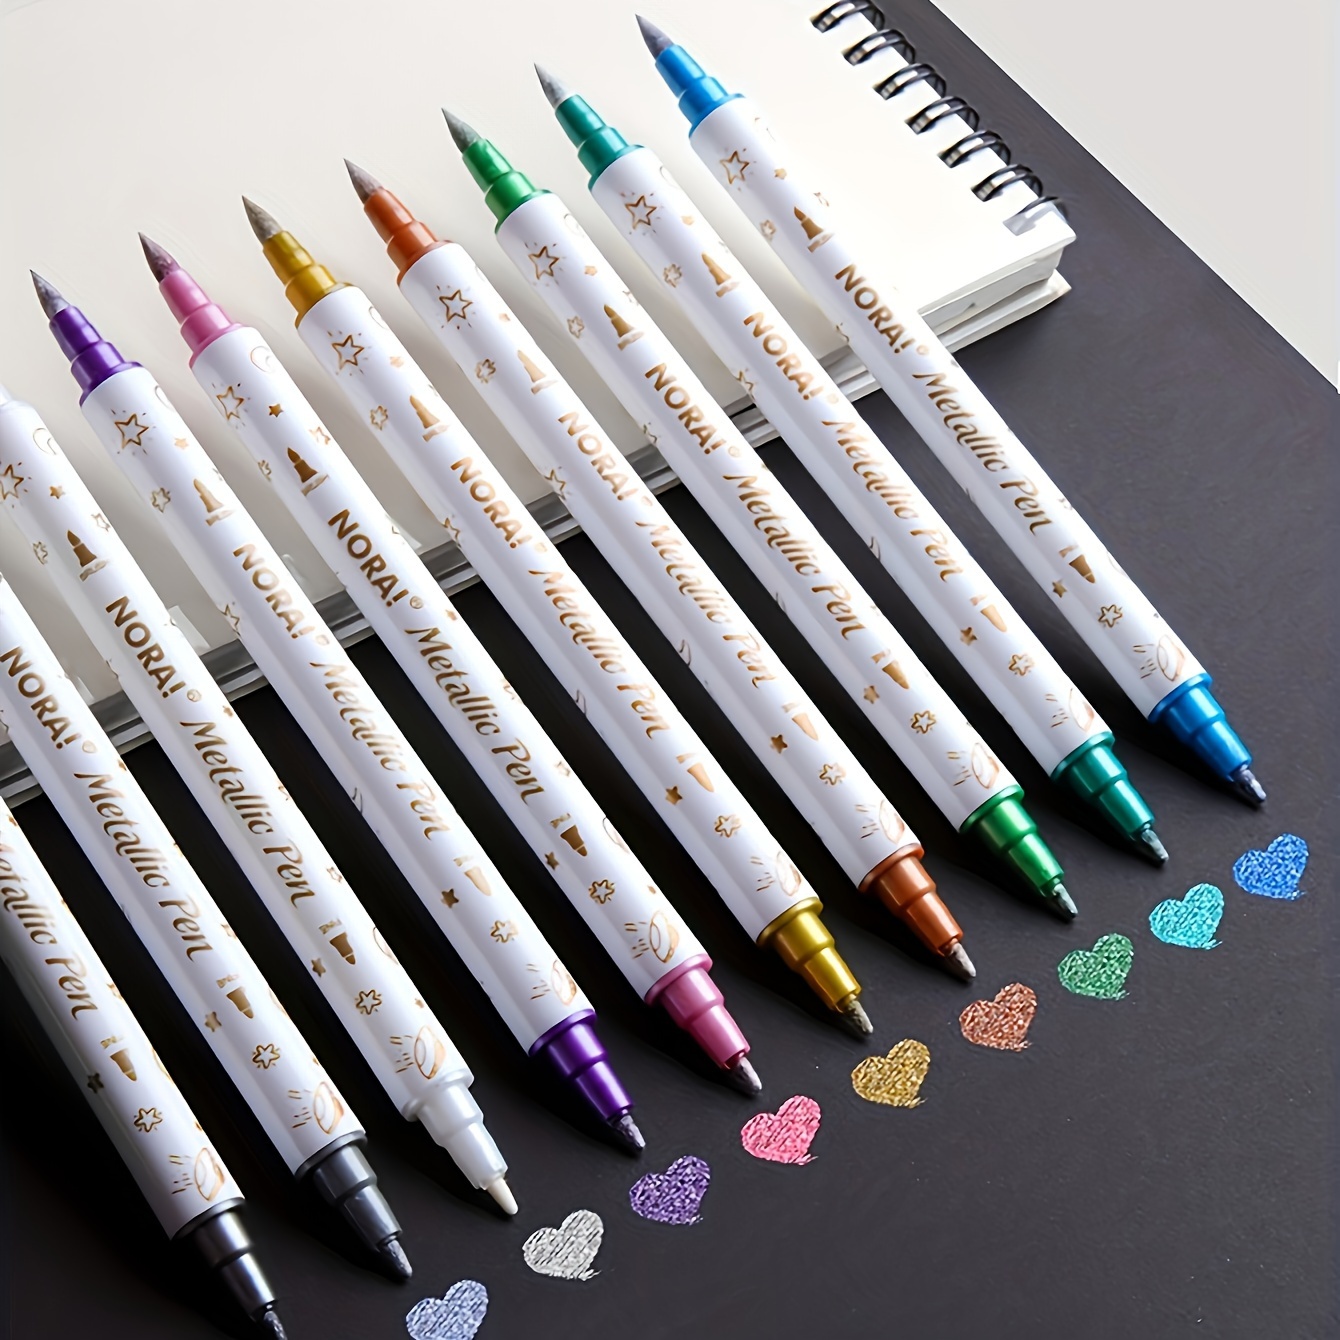 Taotree Glitter Gel Pens, 32 Color Neon Glitter Pens Kenya